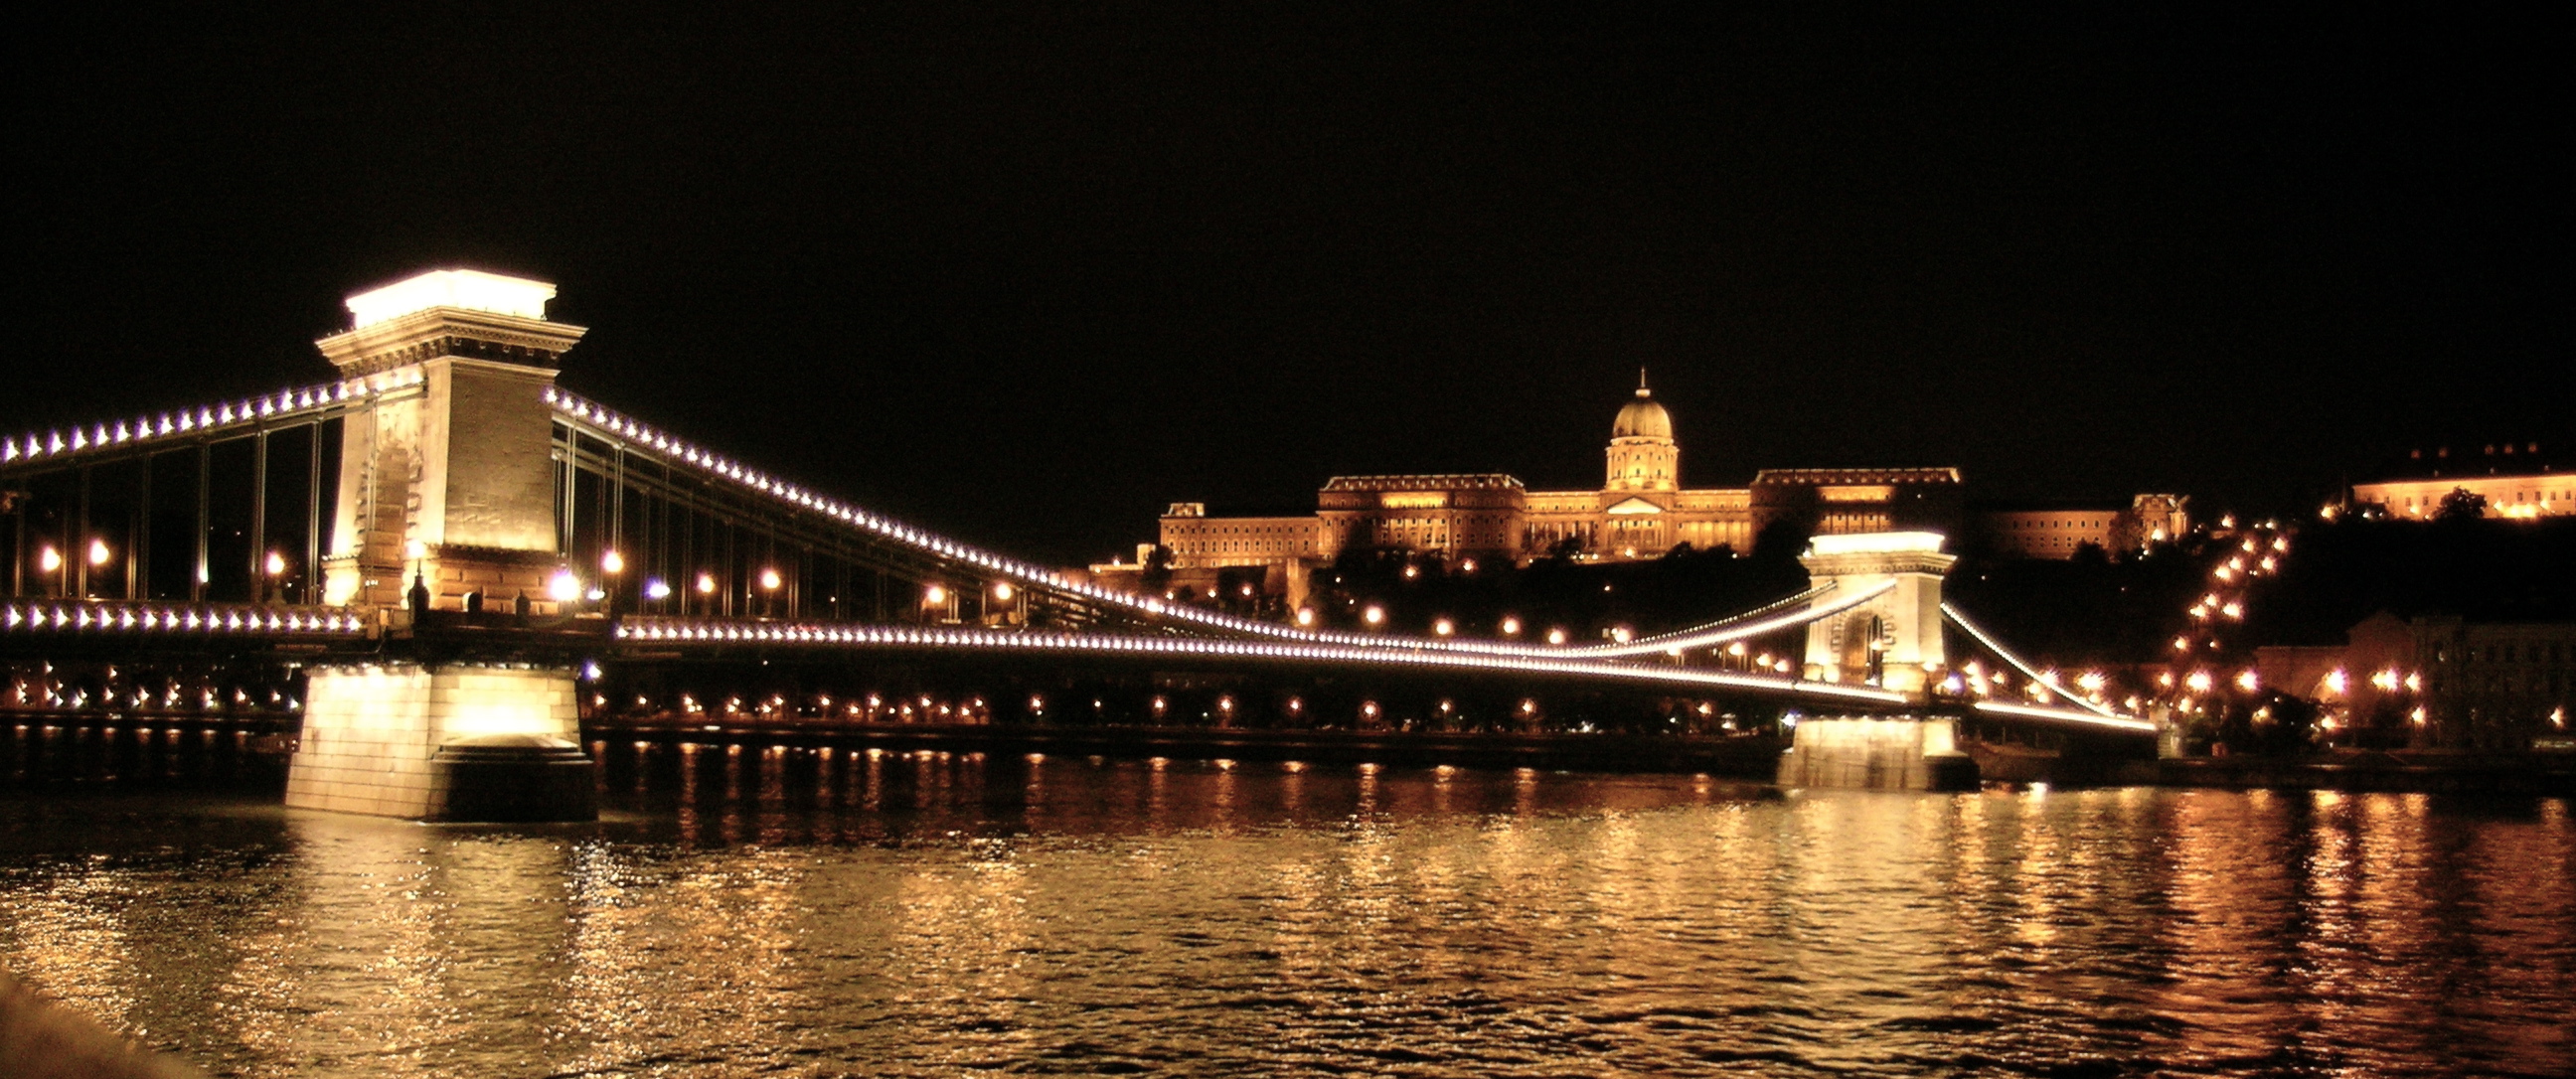 File:Budapest bridge.jpg - Wikimedia Commons